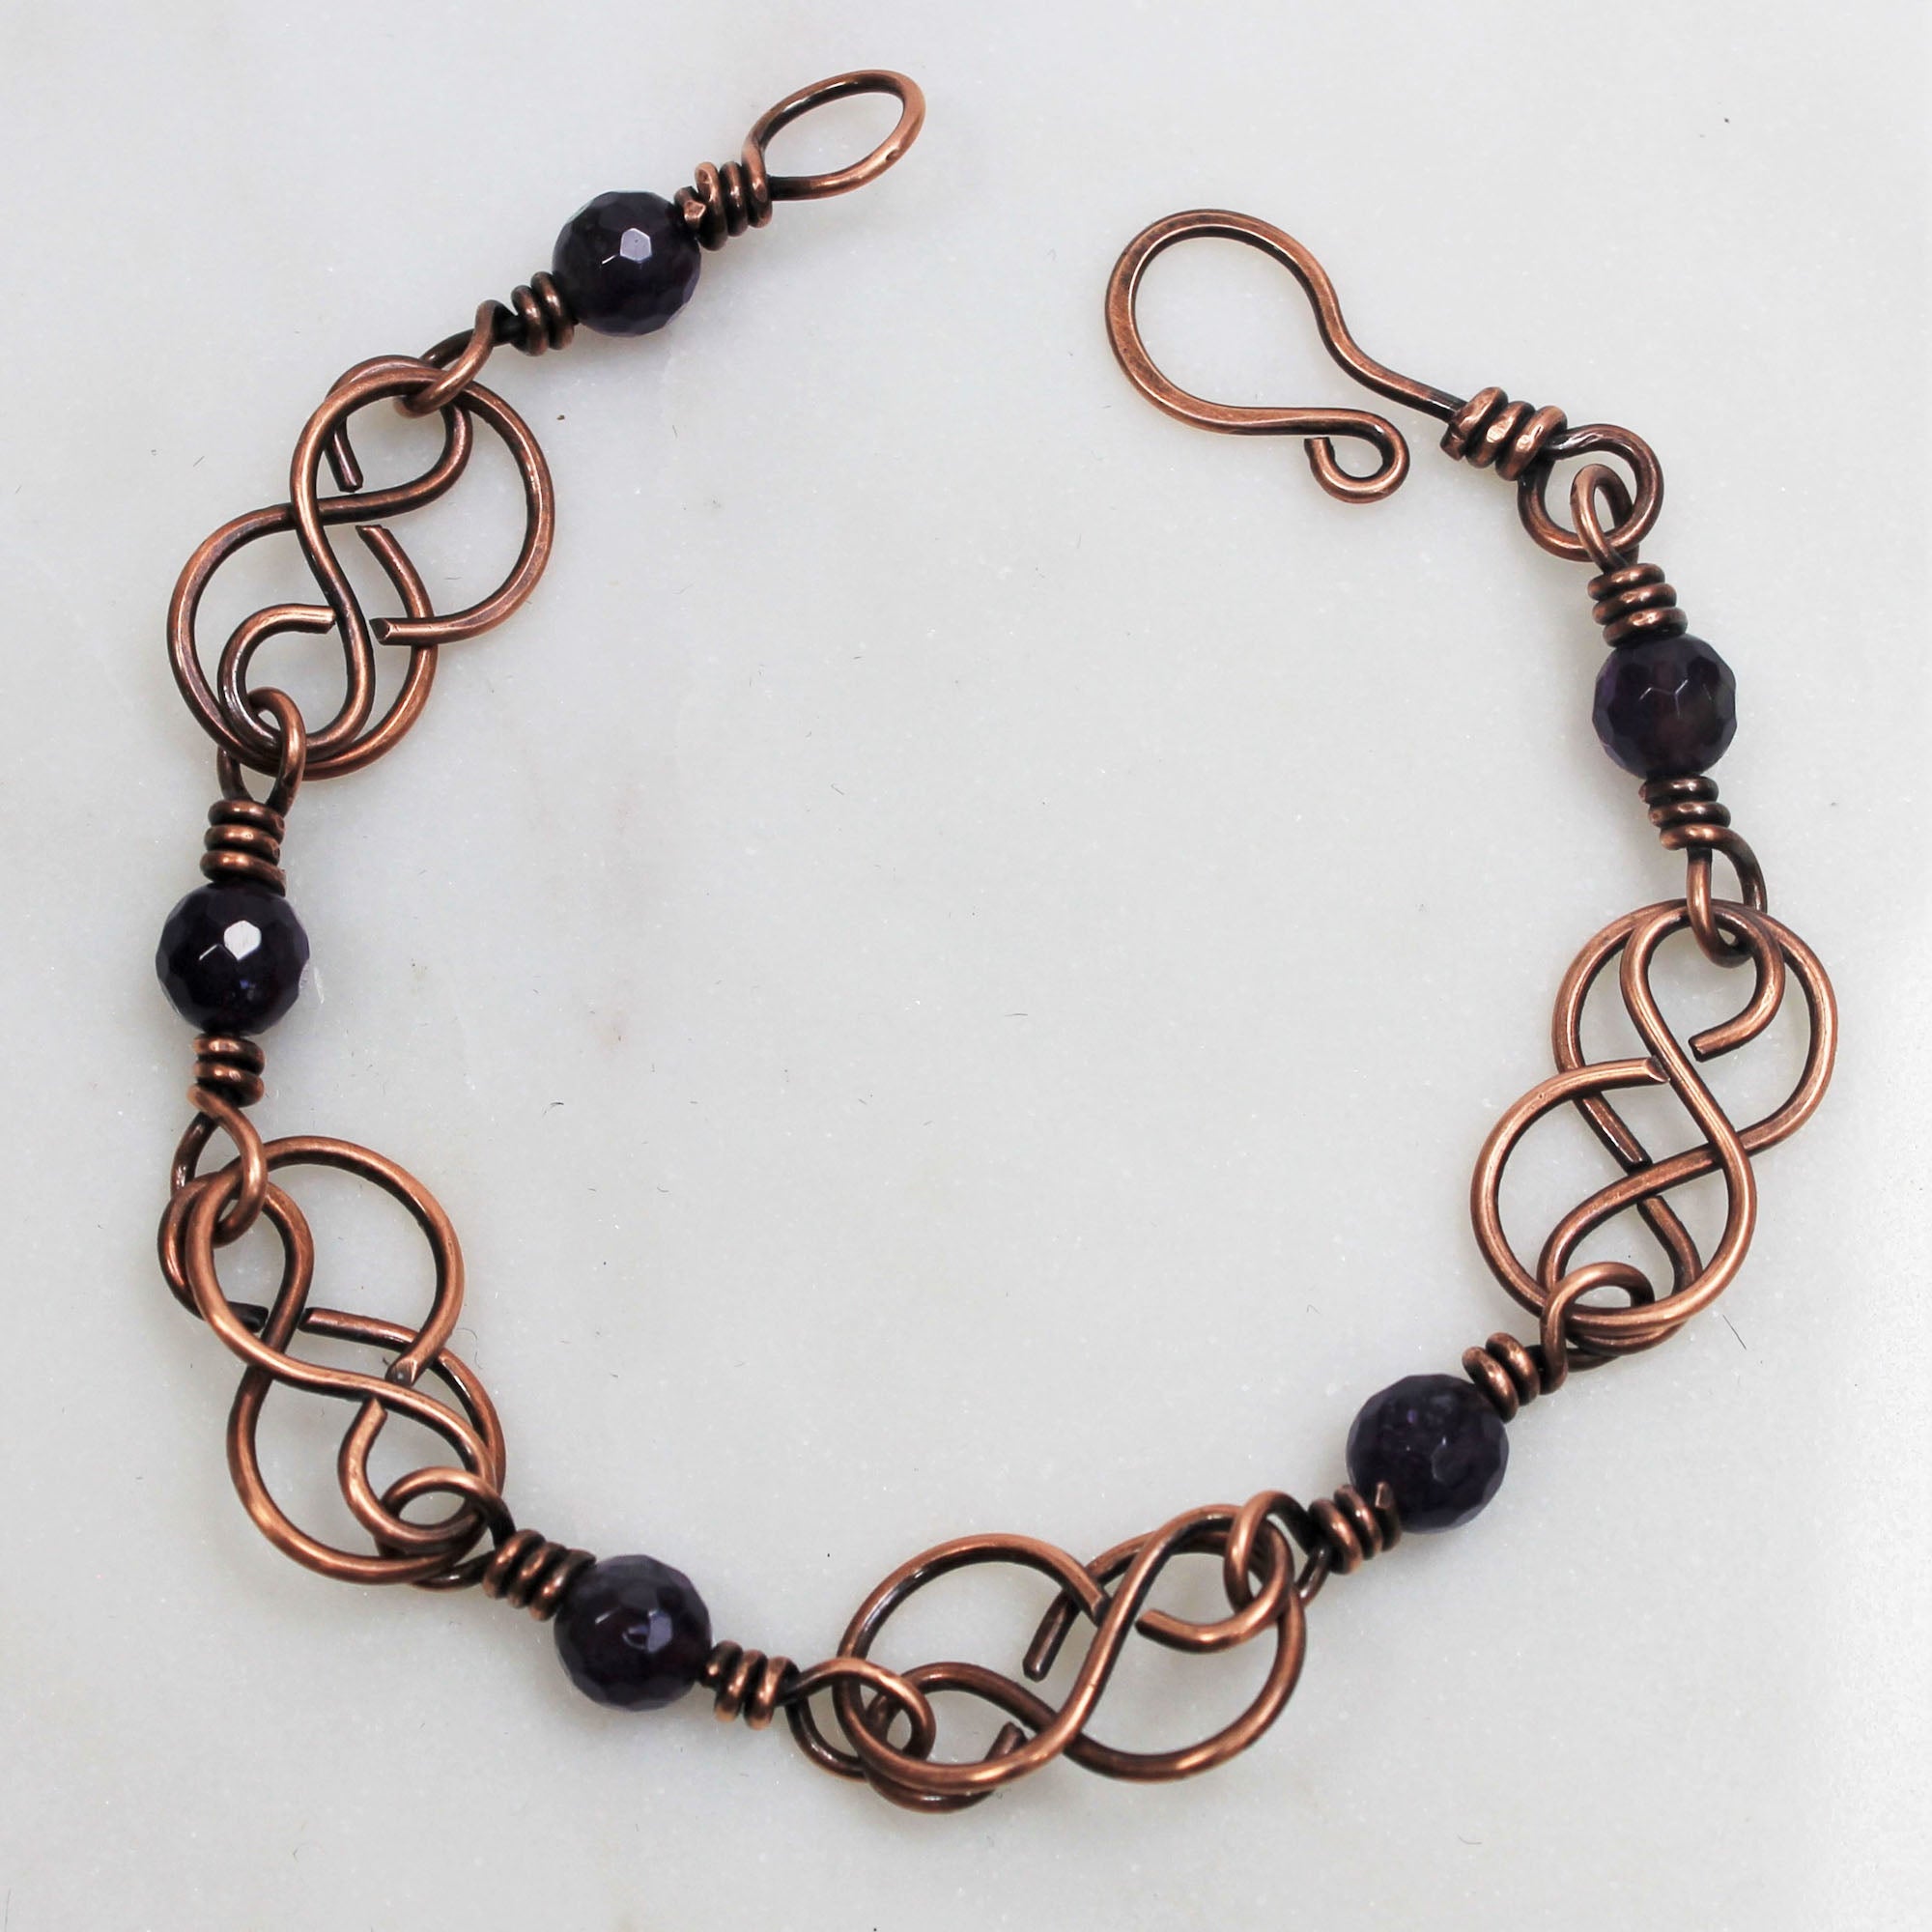 Celtic Amethyst Copper Bracelet